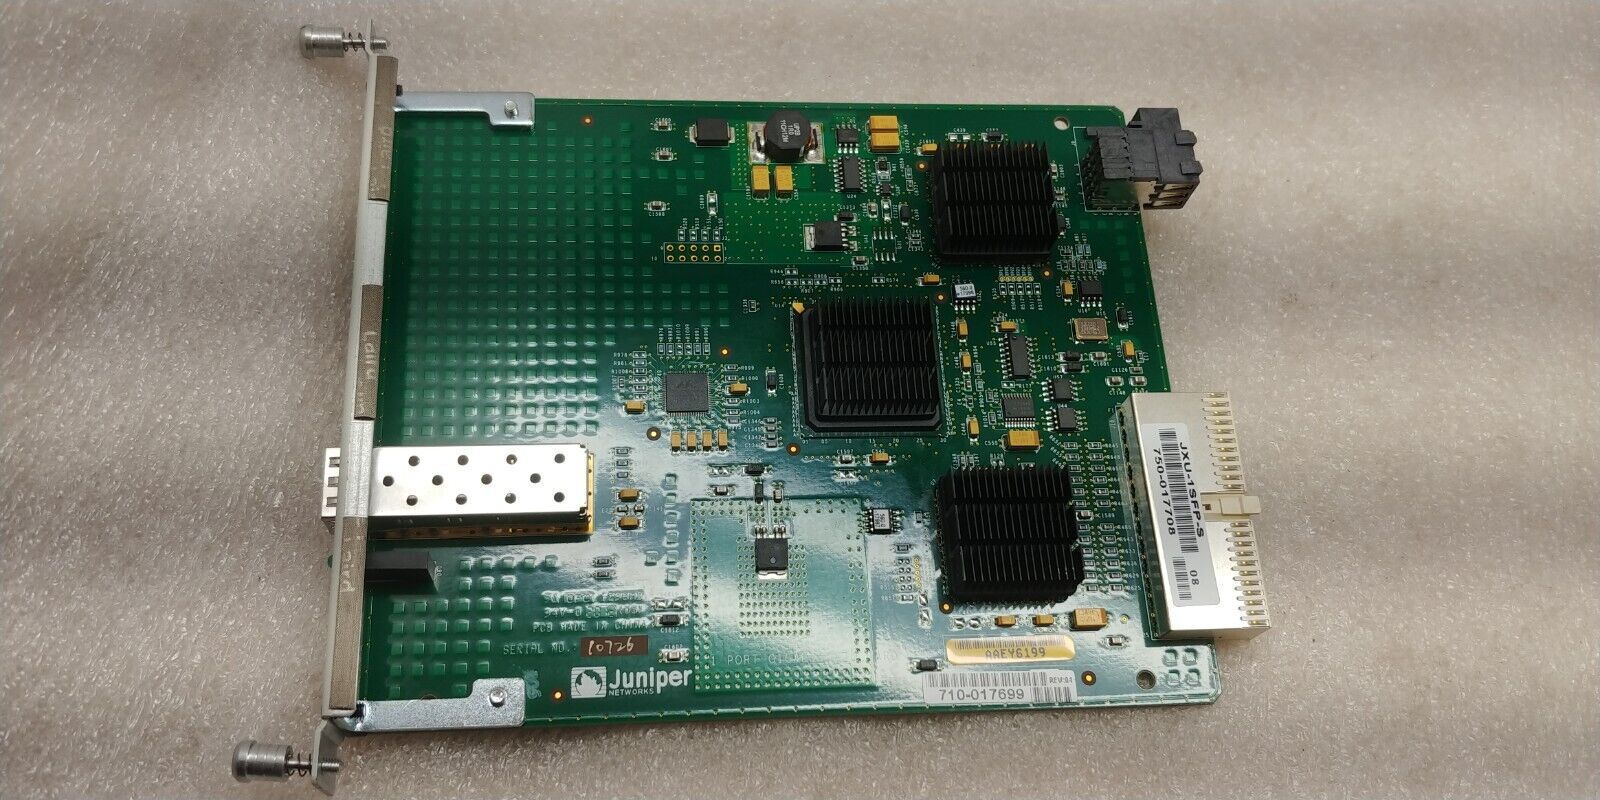 Juniper JXU-1SFP-S Single Port Gigabit SFP Ethernet I/O Card uPIM 710-017699